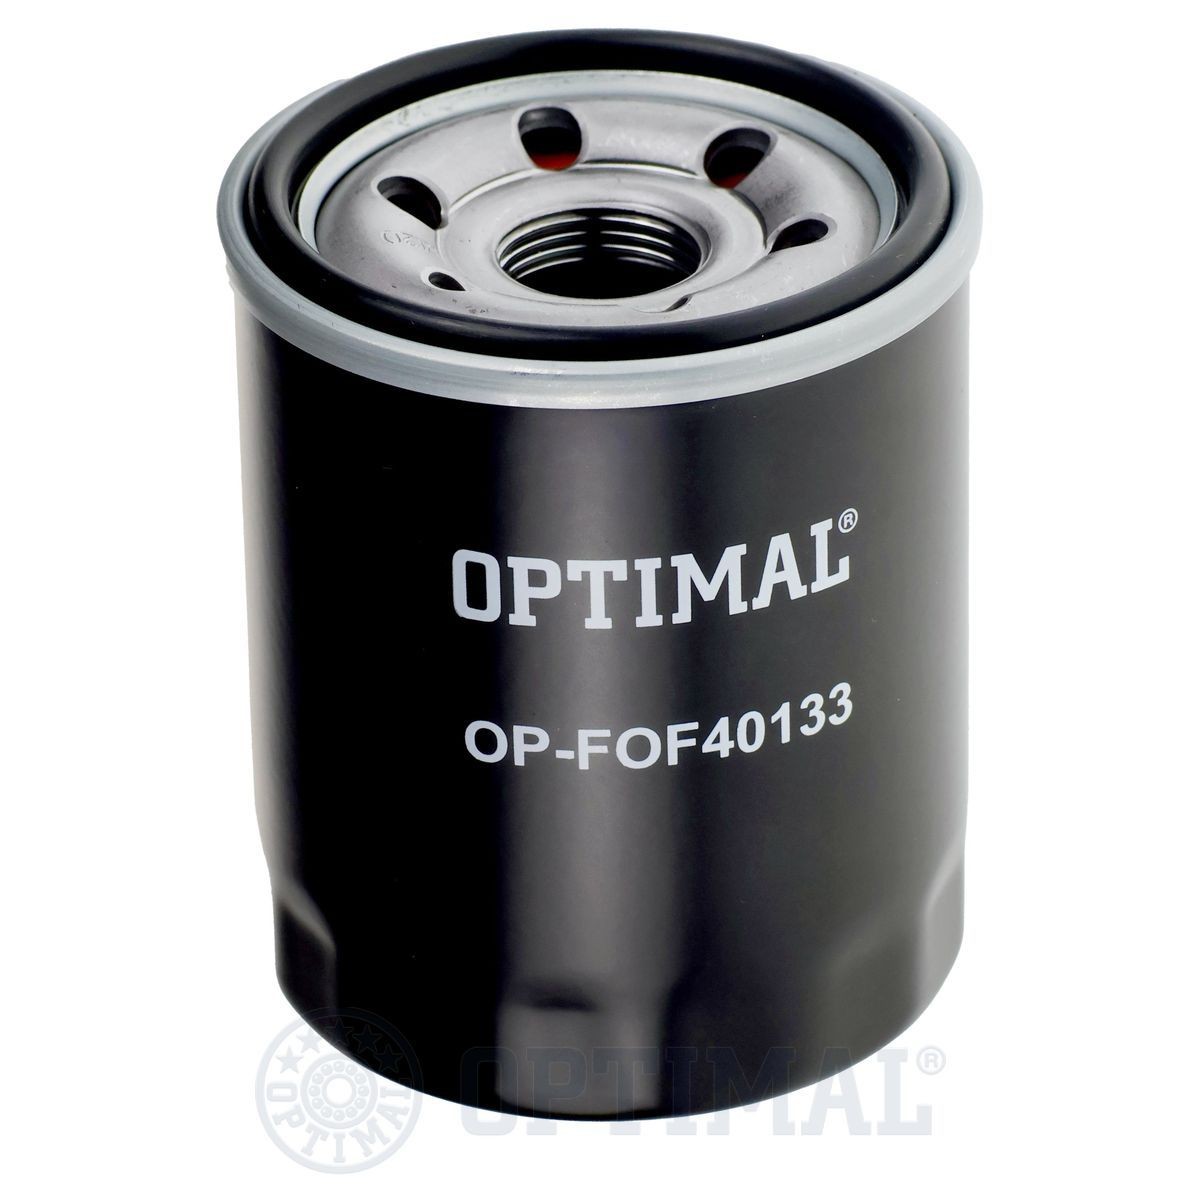 OPTIMAL OP-FOF40133 Oil filter S26300-02501